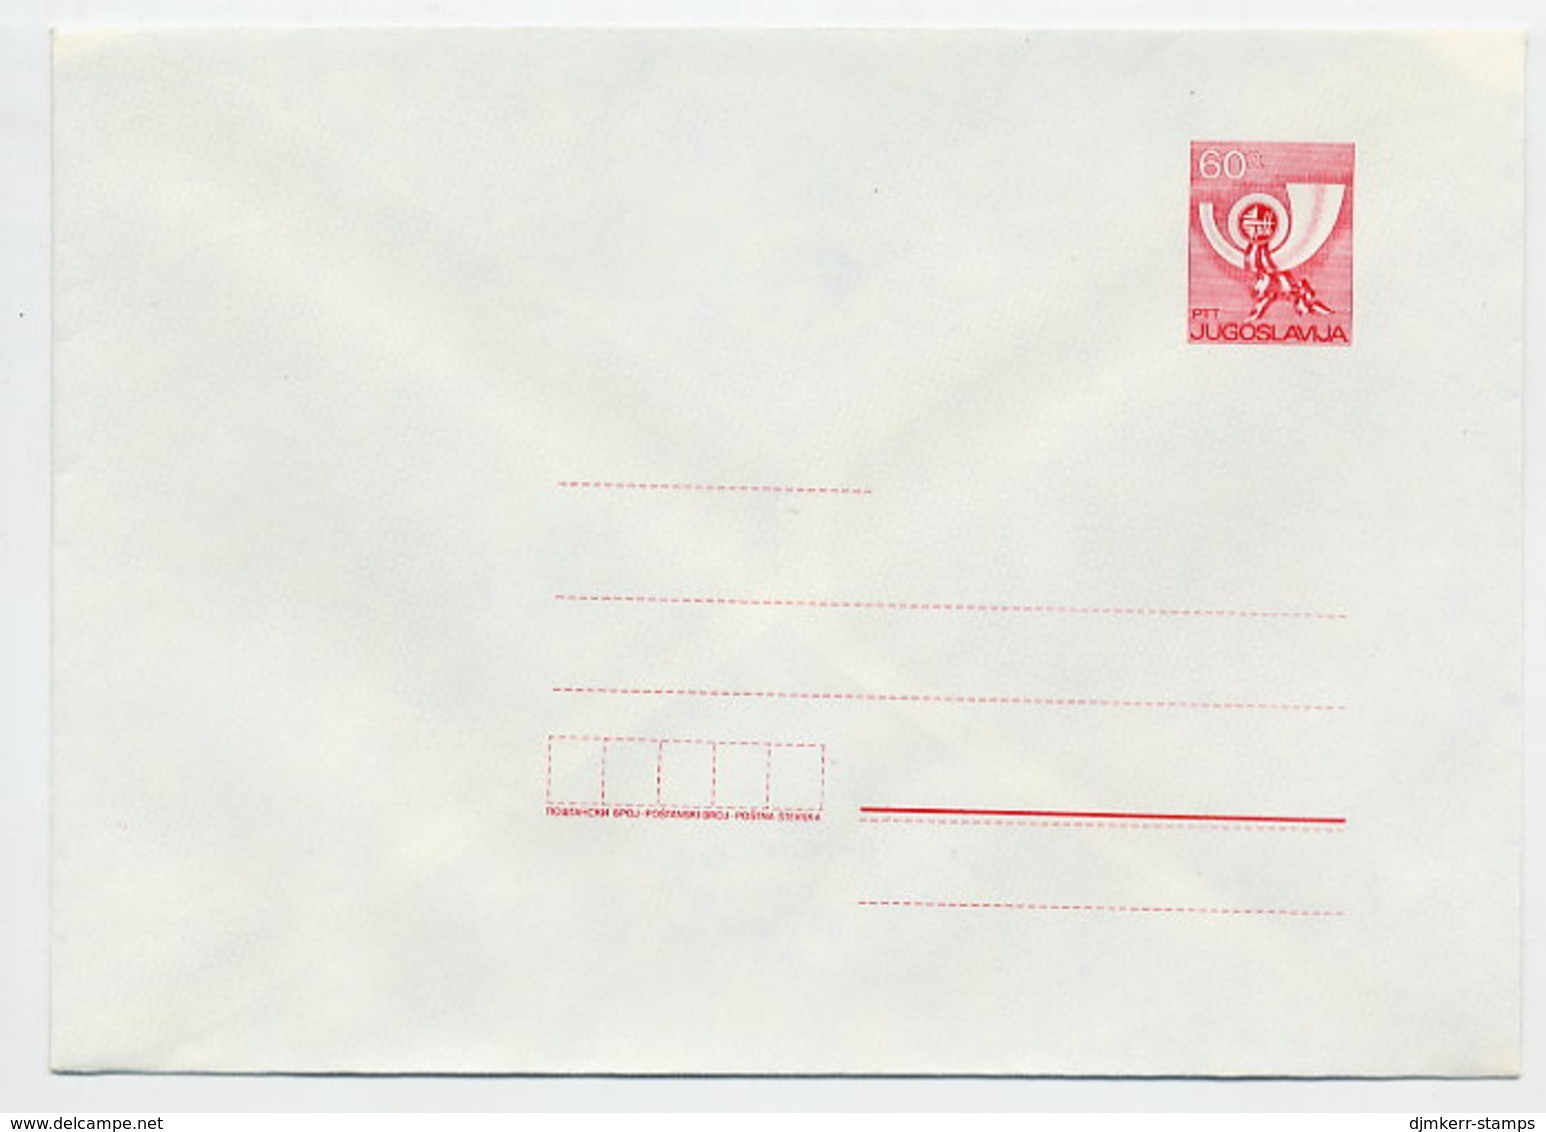 YUGOSLAVIA 1987 Posthorn 60 D. Envelope, Unused. Michel U77 - Entiers Postaux